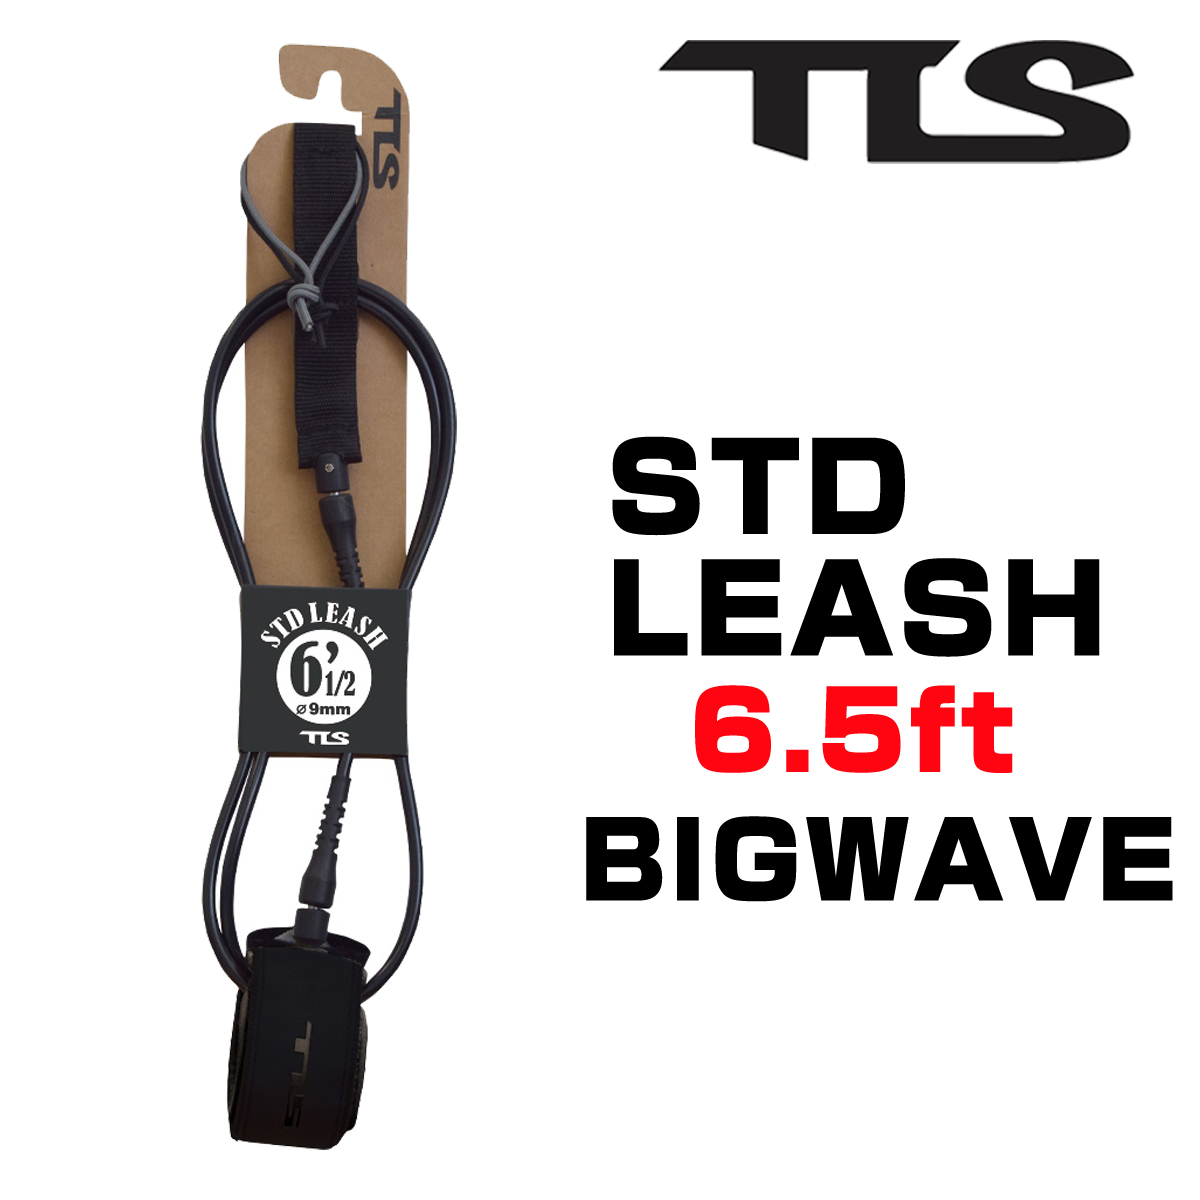 TOOLS STD LEASH 6.5ft BIGWAVE リーシュコード リーシュ 6.5f 9mm 高性能スイベル ワイドカフ カラー豊富 サーフィン  サーフボード 初心者 ビギナー :tls-stdls65bw:BULLS-SURF - 通販 - Yahoo!ショッピング